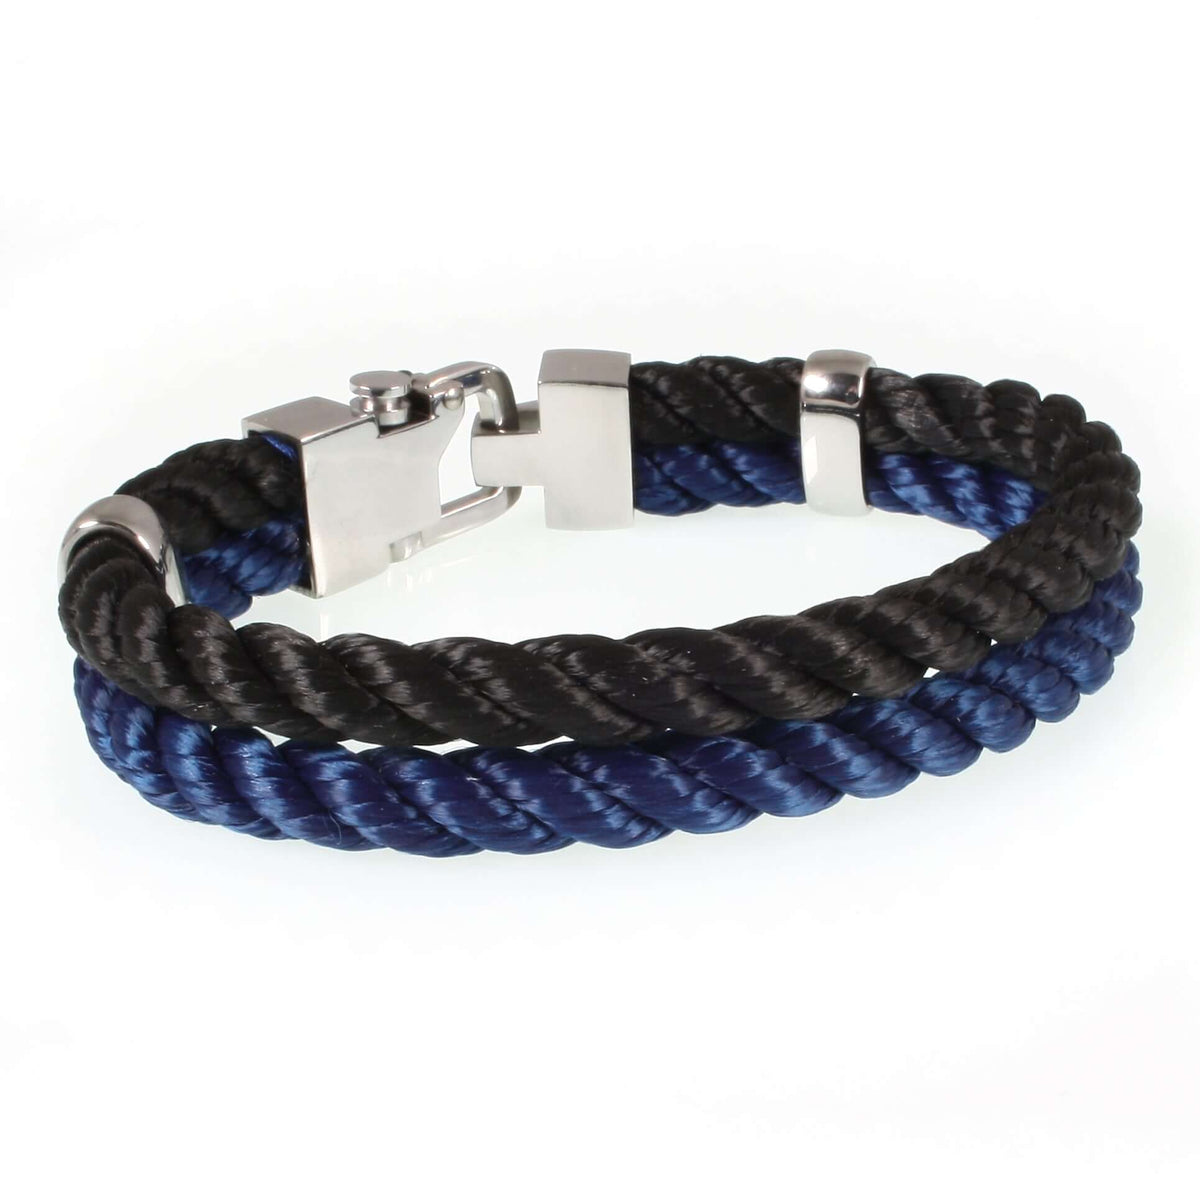 Herren-Segeltau-Armband-Turn-schwarz-koenigsblau-geflochten-Kordel-Edelstahlverschluss-hinten-wavepirate-shop-k